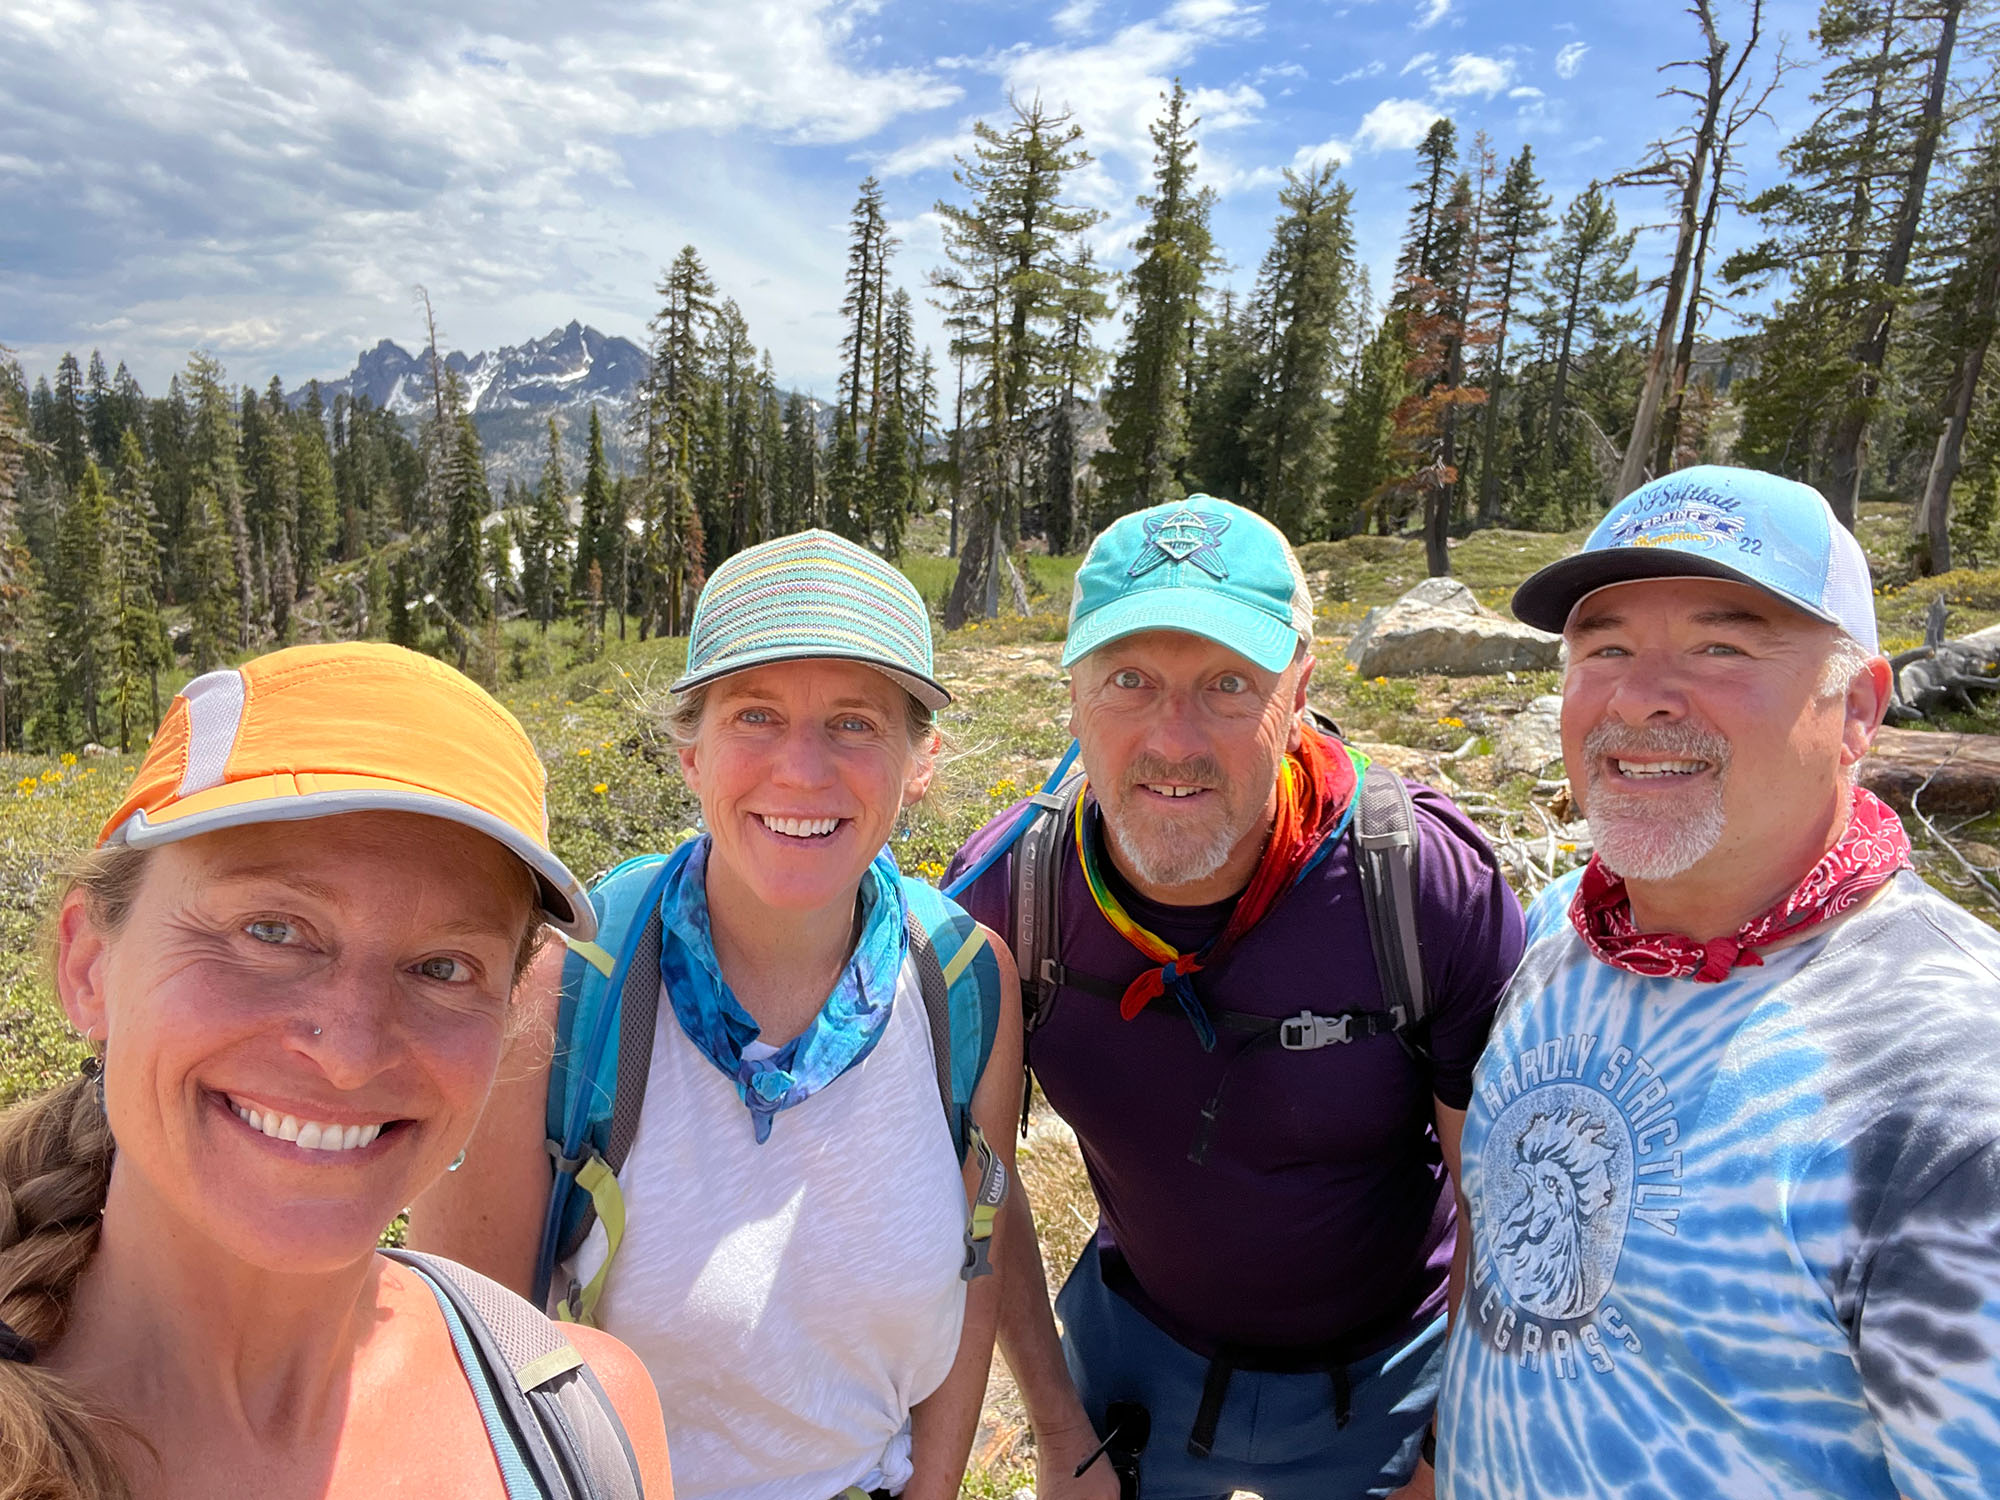 John DiDomenico and friends on a hike near Lakes Basin, CA